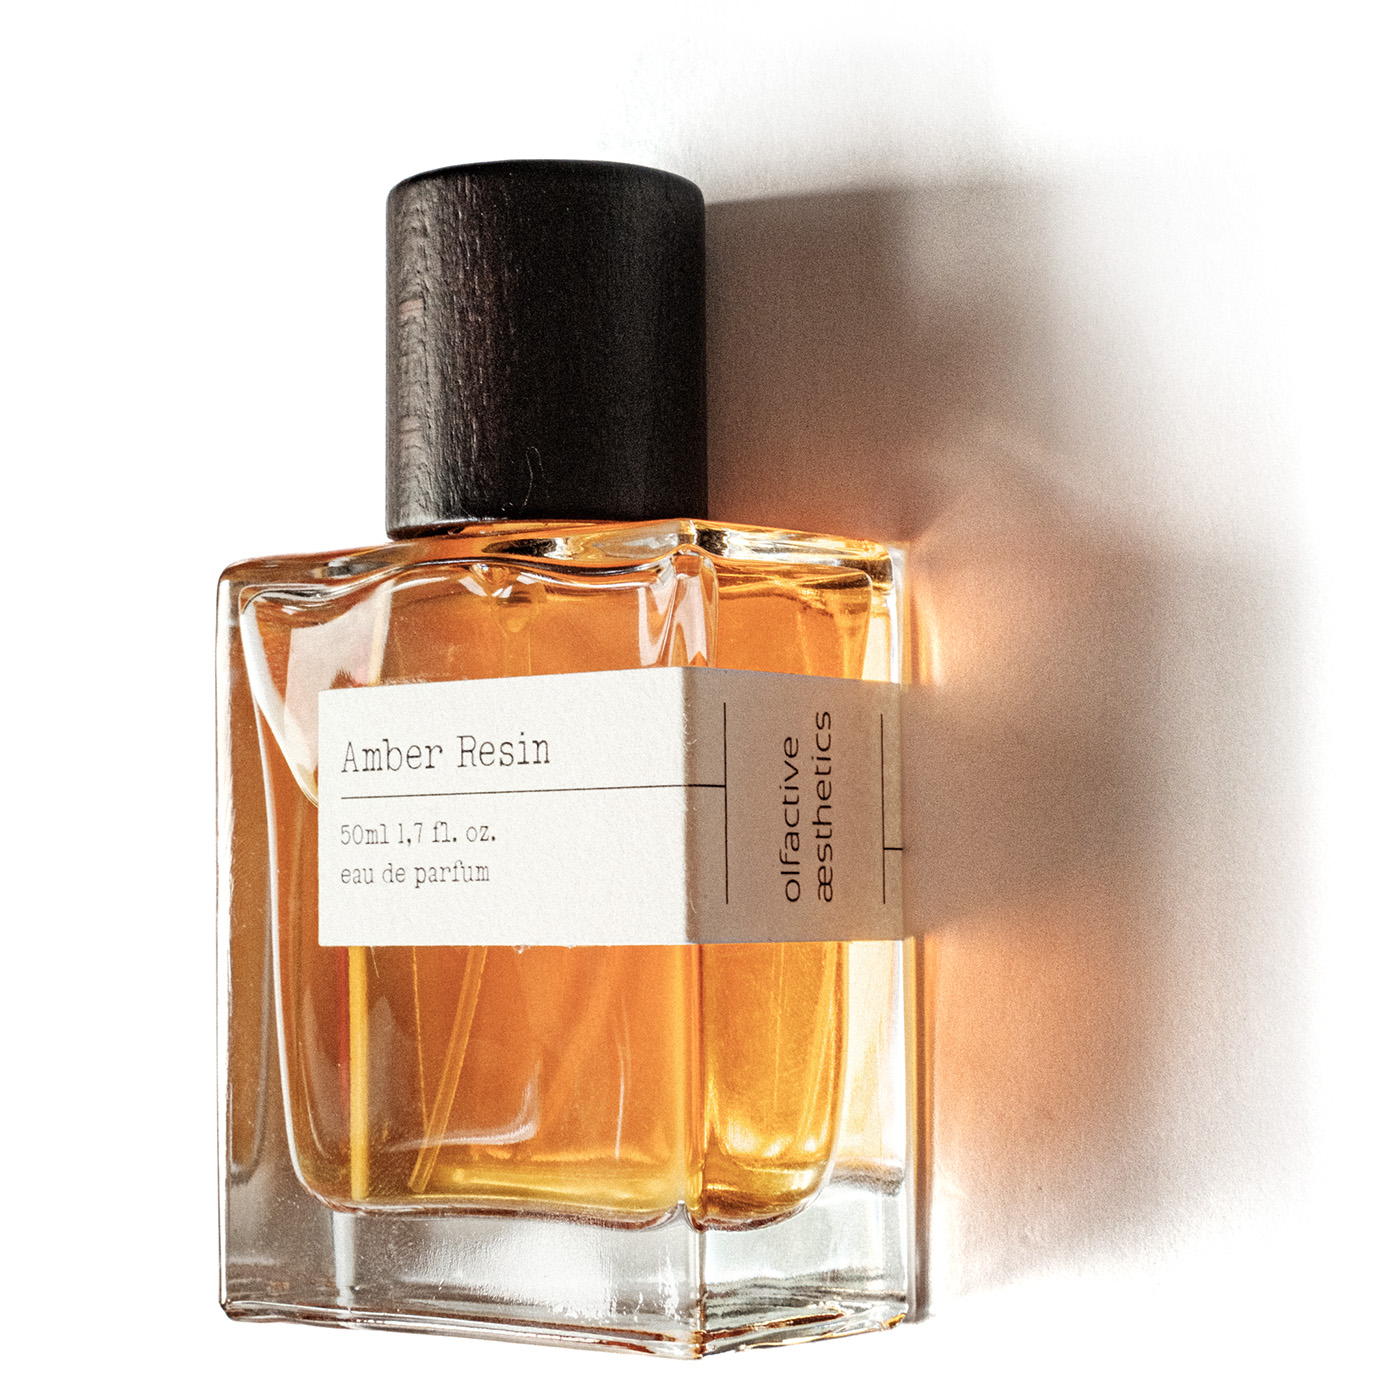 Amber Resin niche perfume - olfactive aesthetics author's niche perfumery